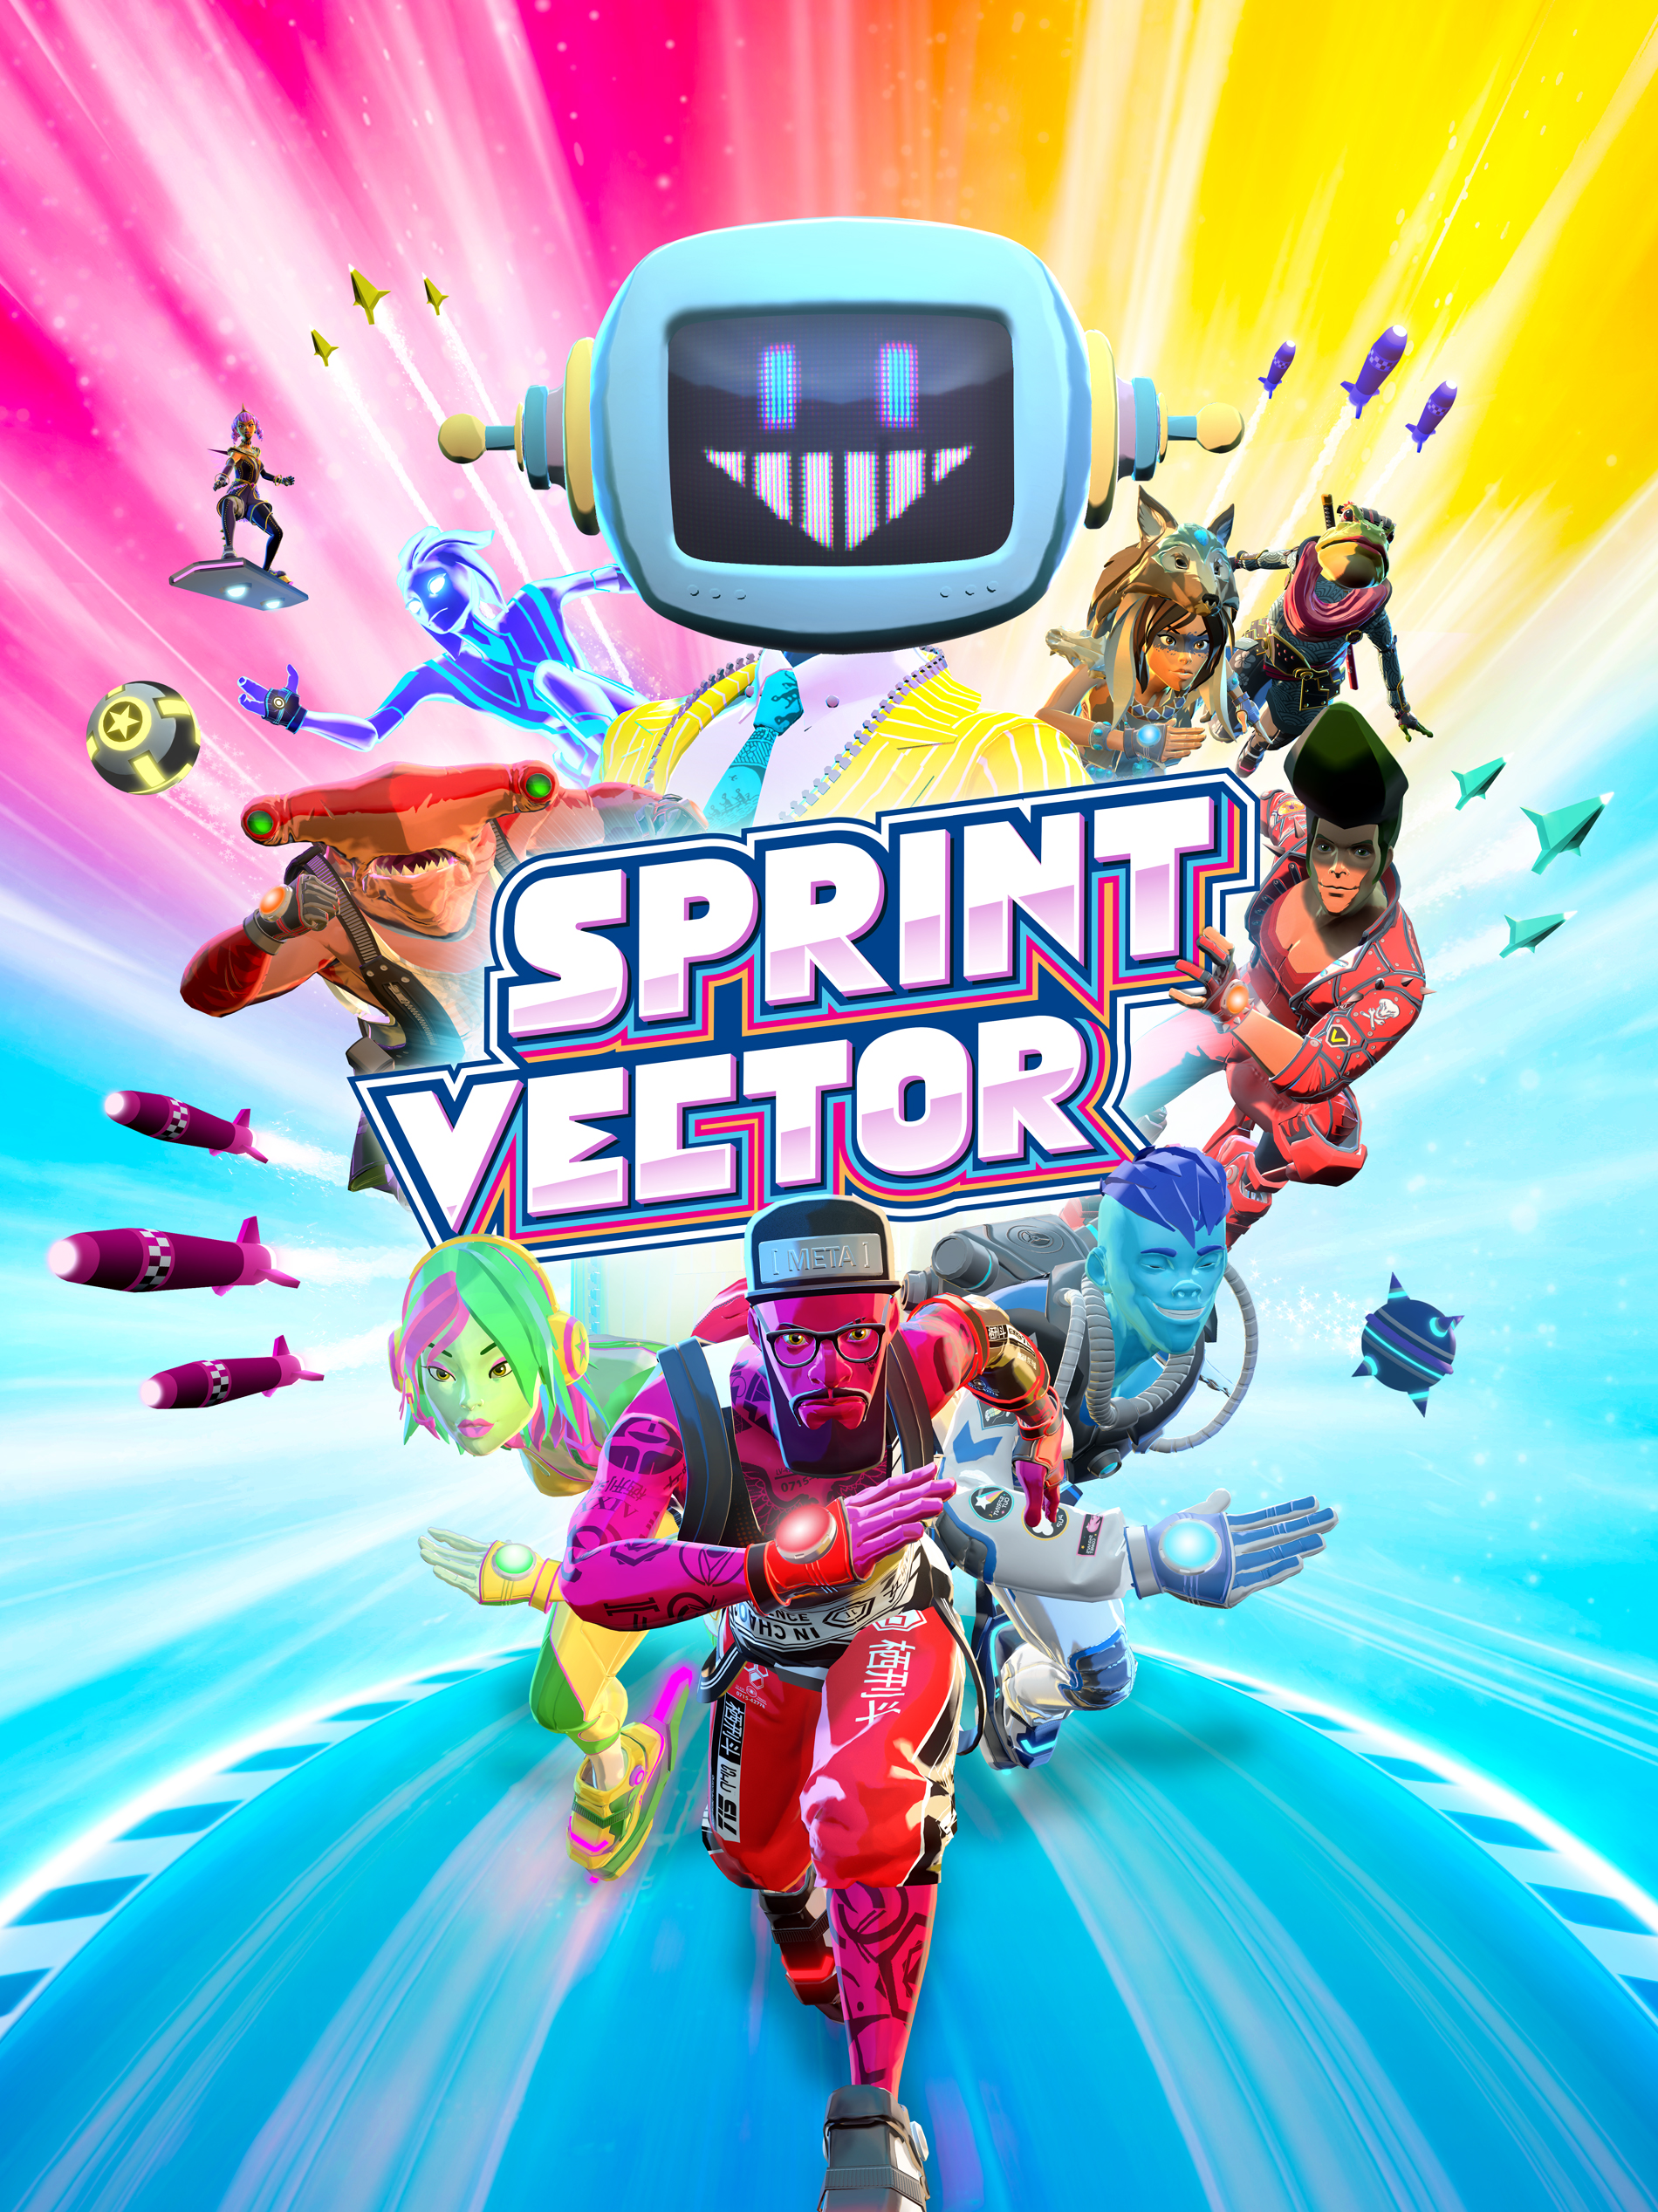 Sprint Vector VR Racing Game Key Art Design